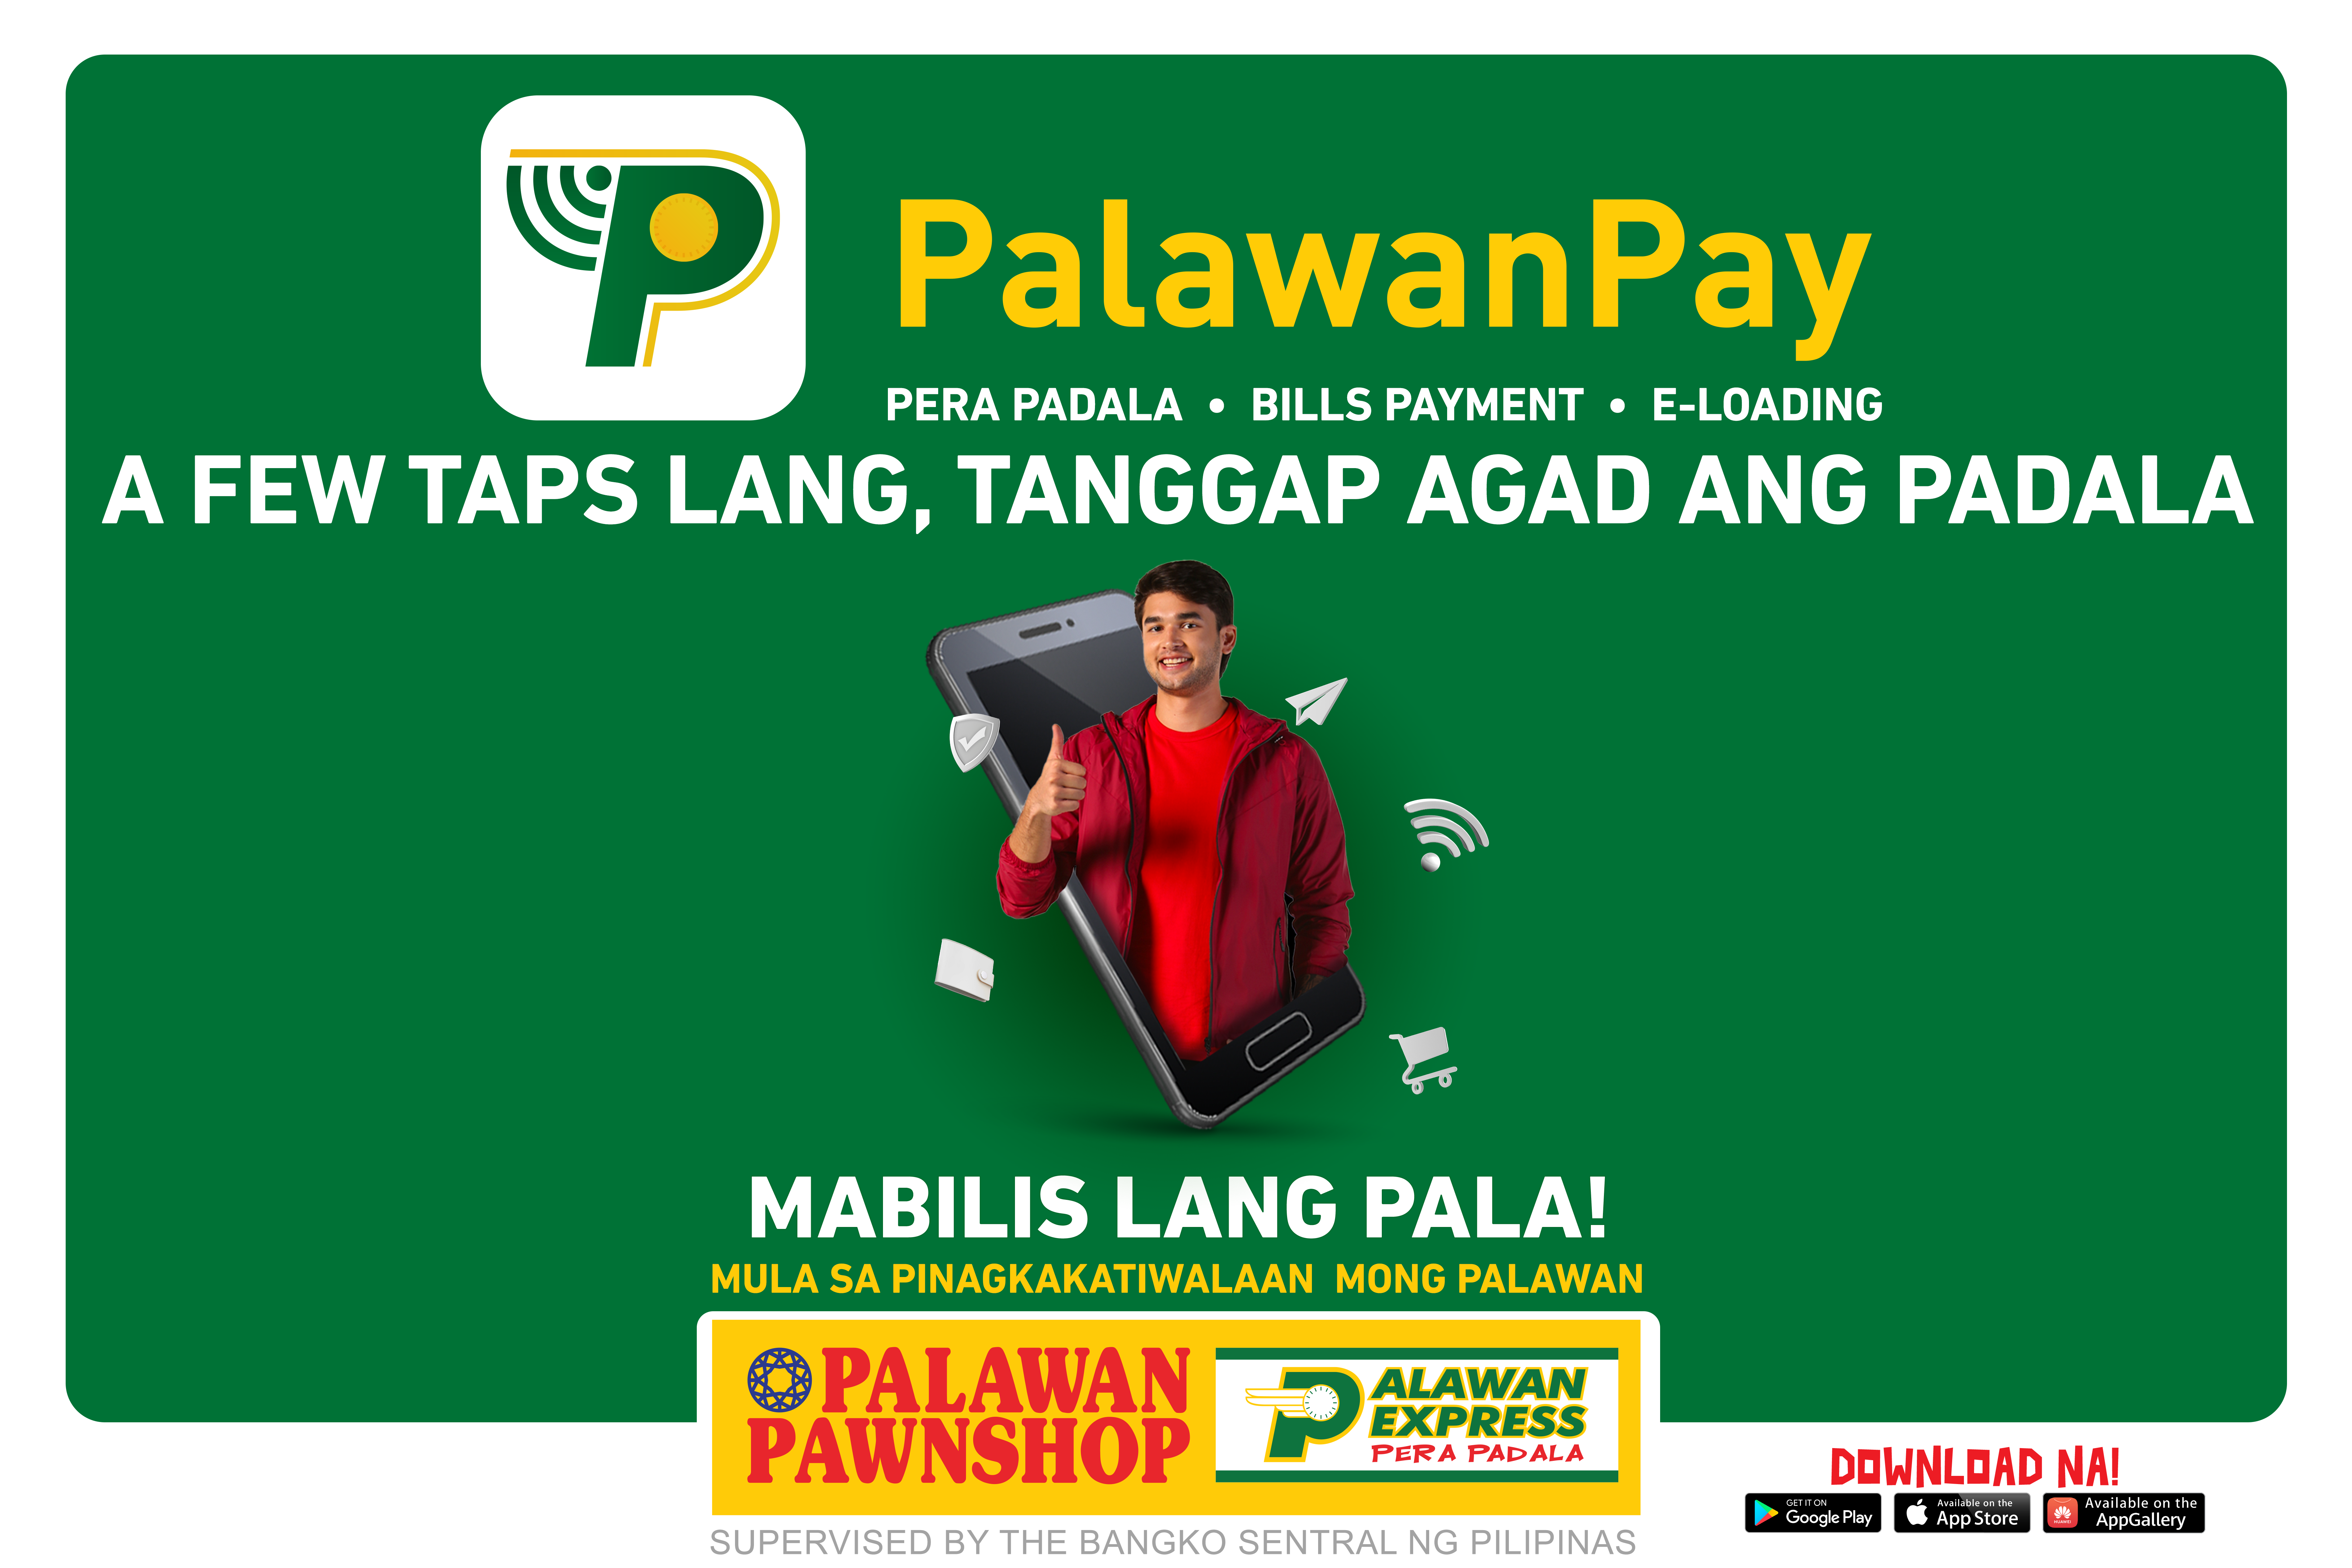 Palawan Pawnshop launches PalawanPay e-wallet